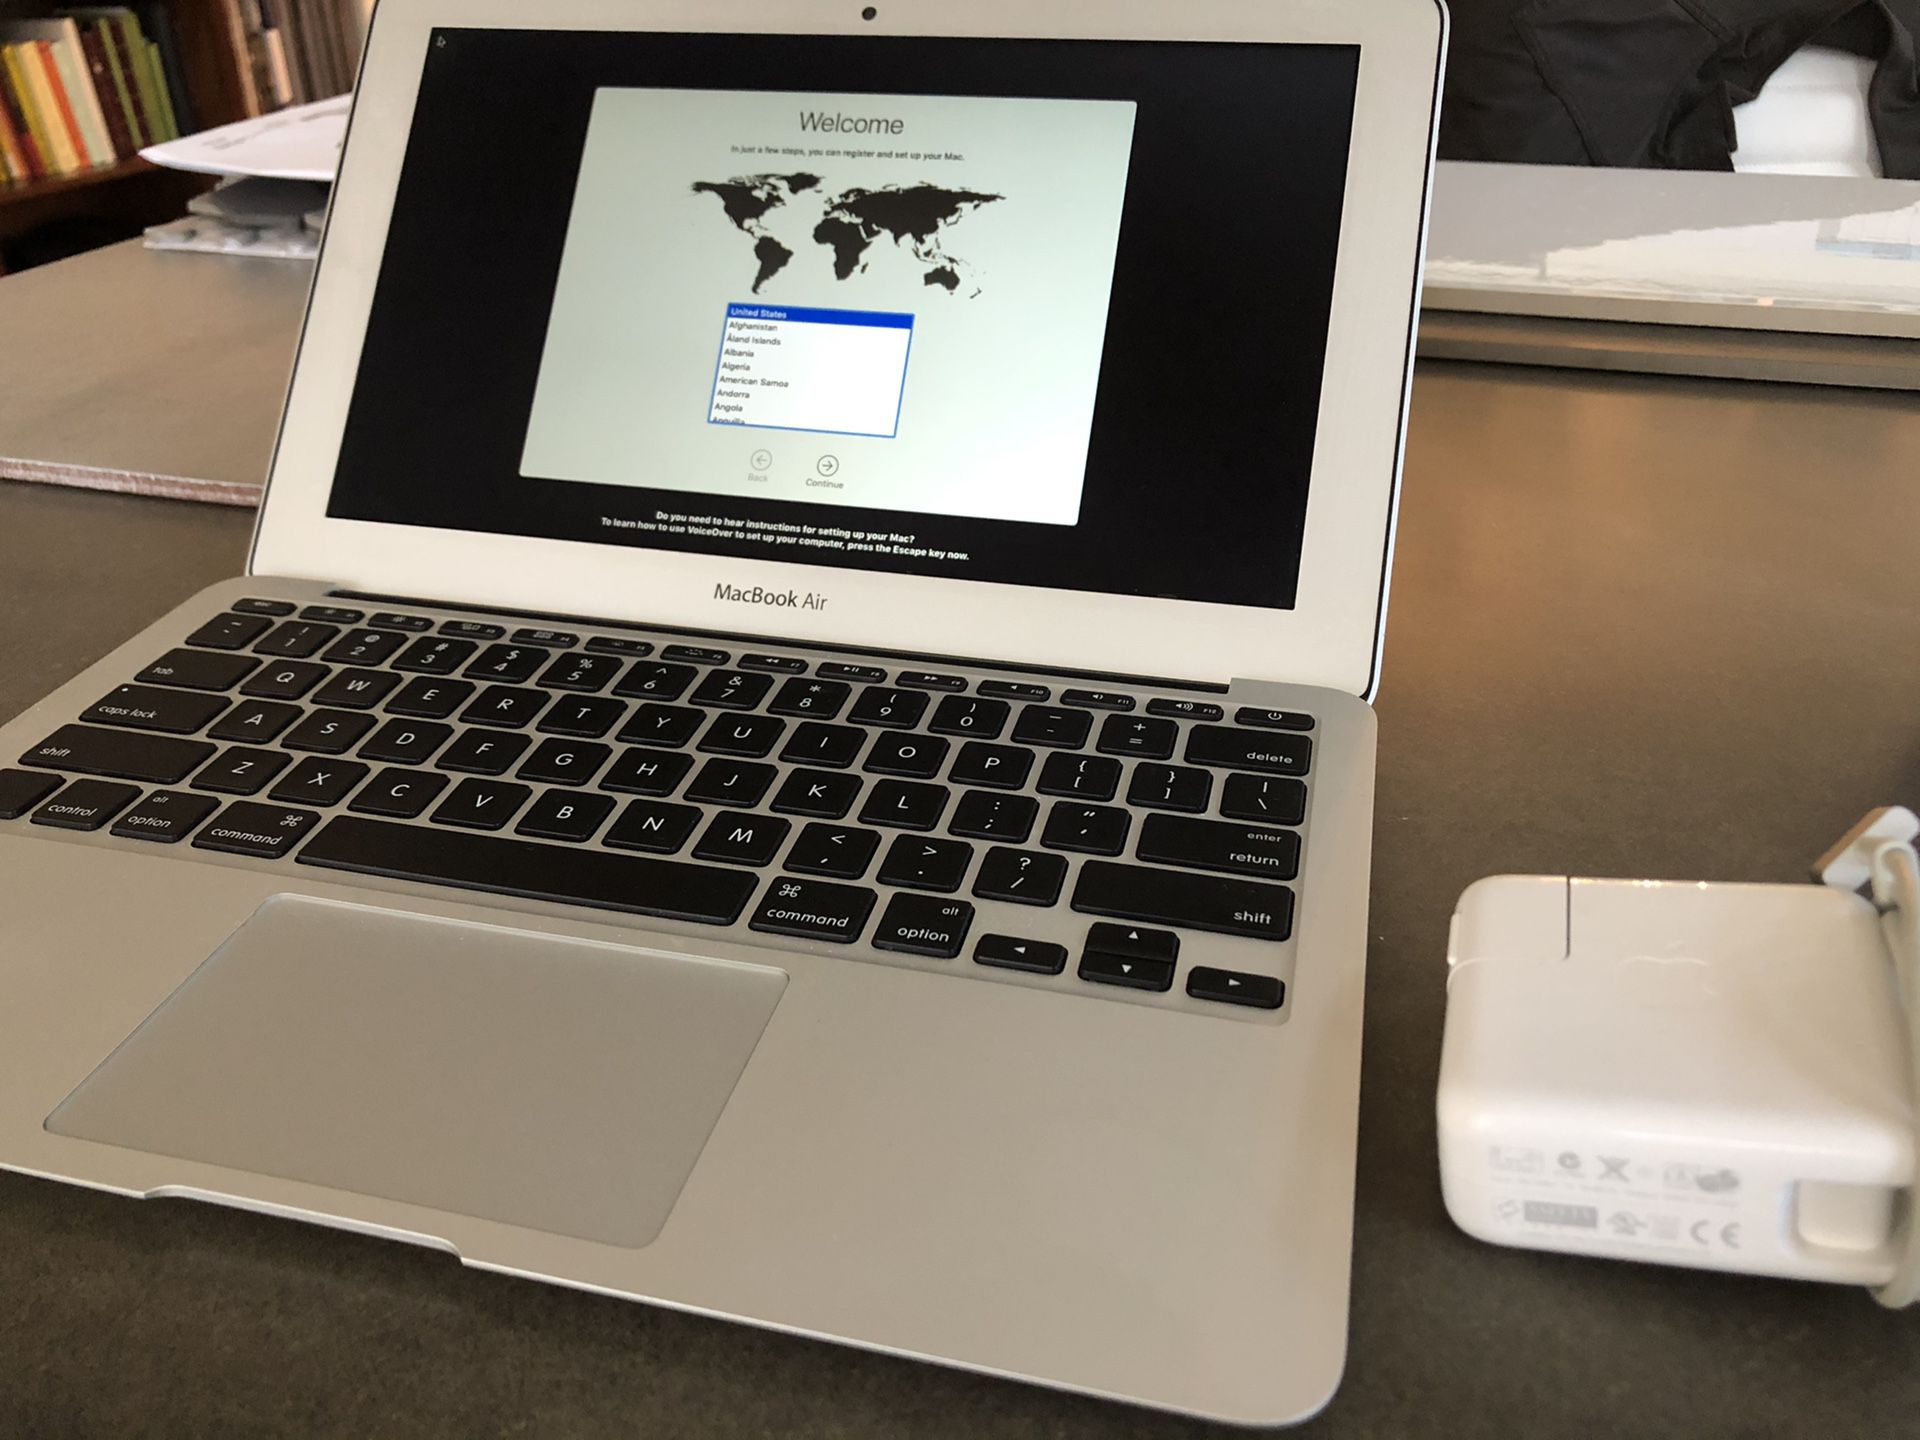 MacBook Air 11” (early 2015)